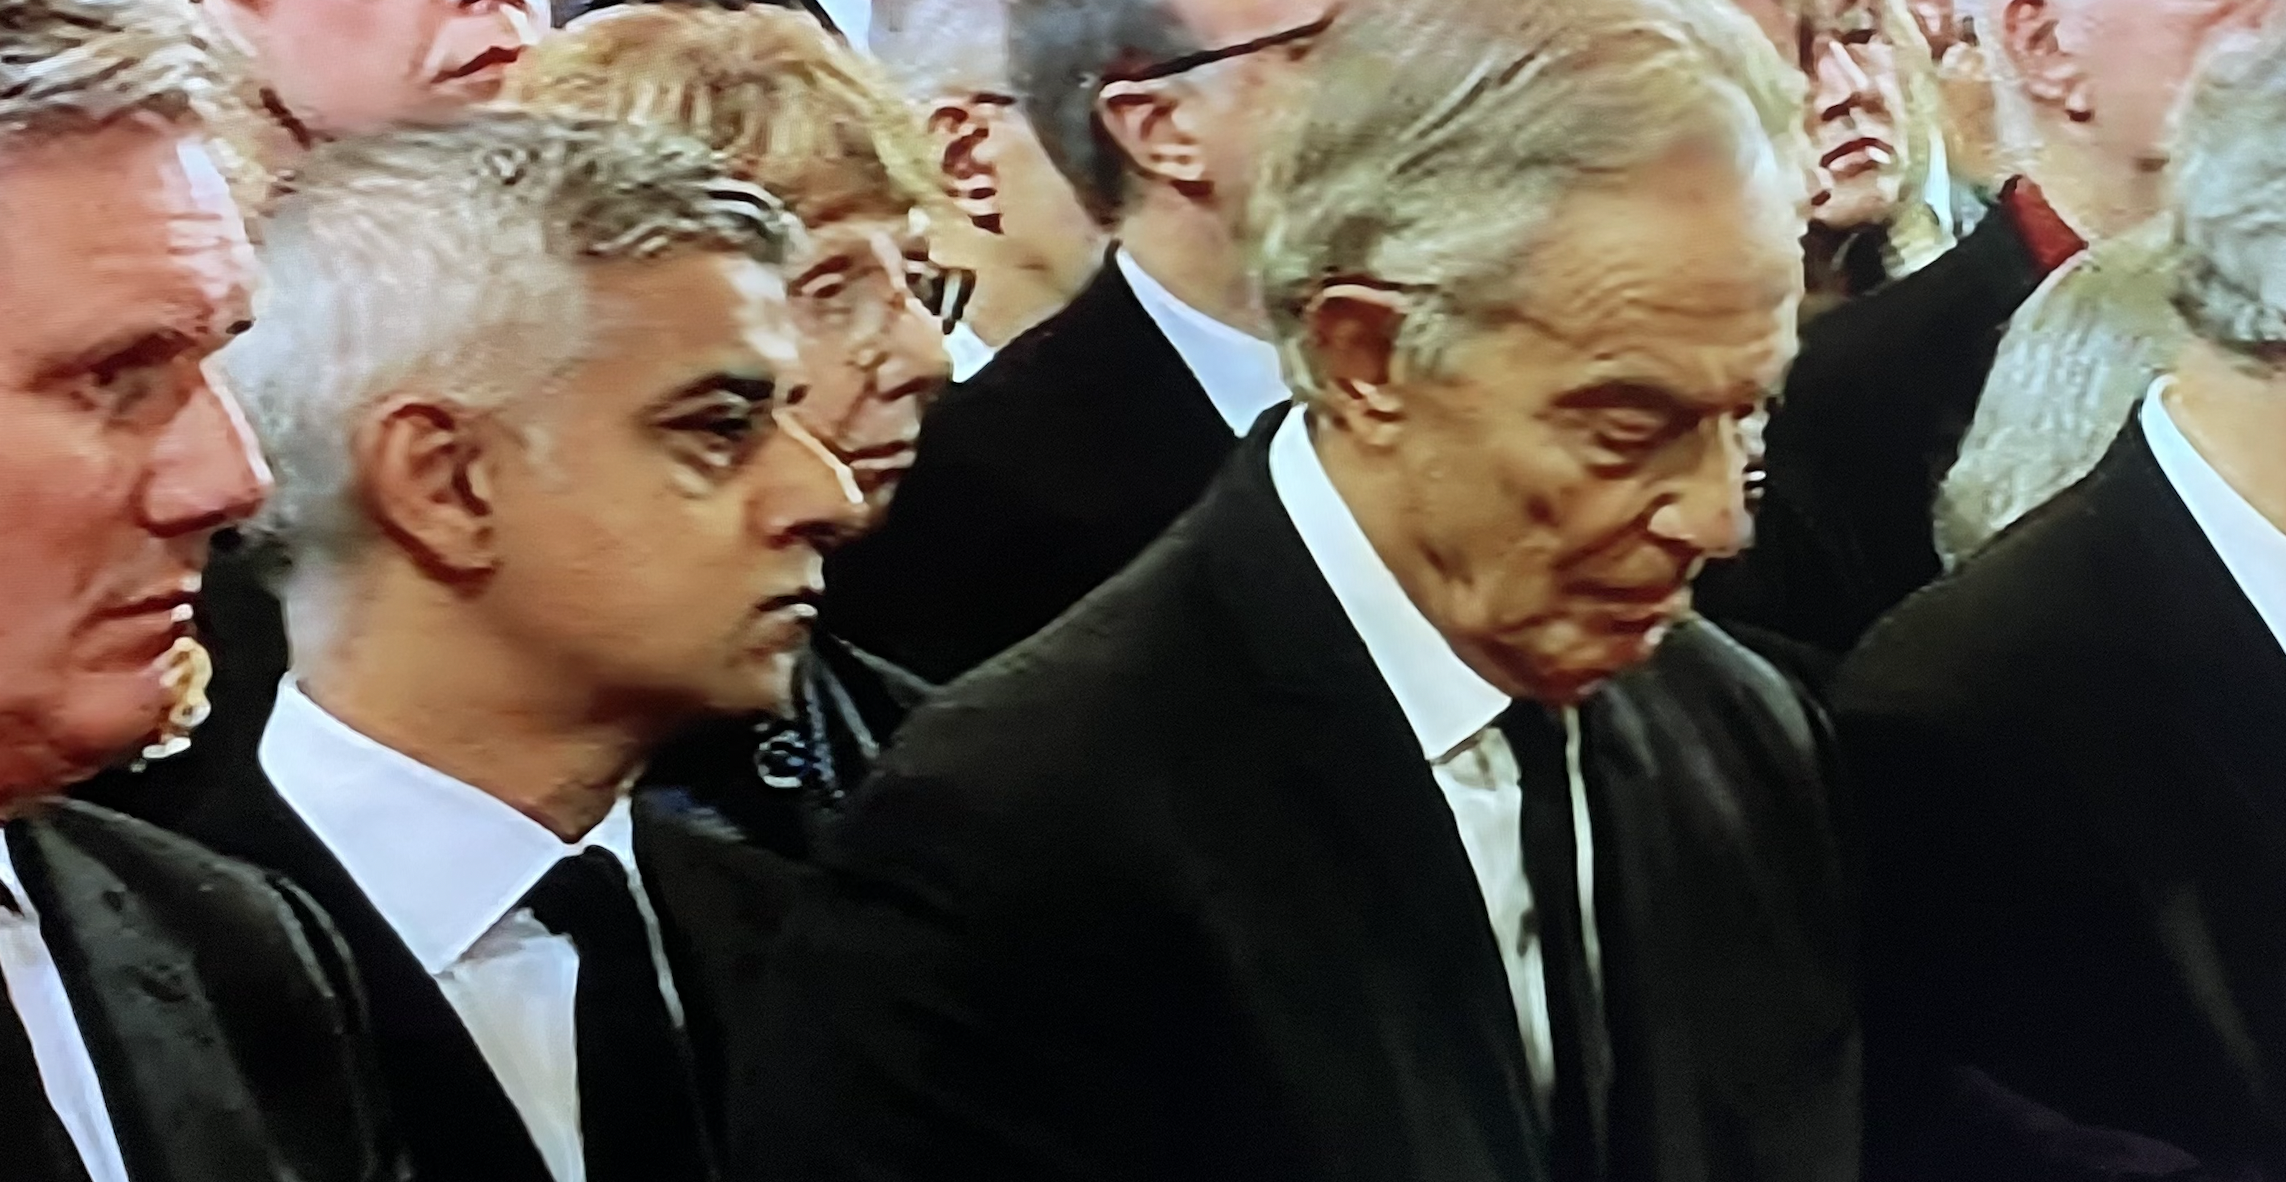 London mayor Sadiq Khan and former prime minister Tony Blair.